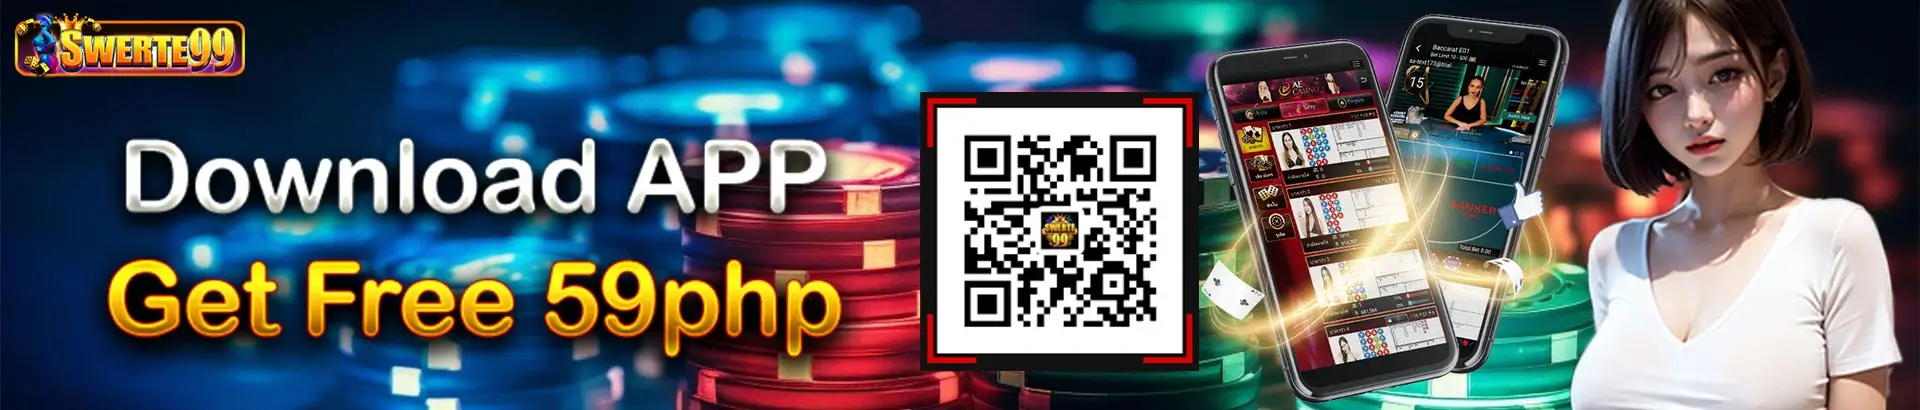 swerte99 casino download app